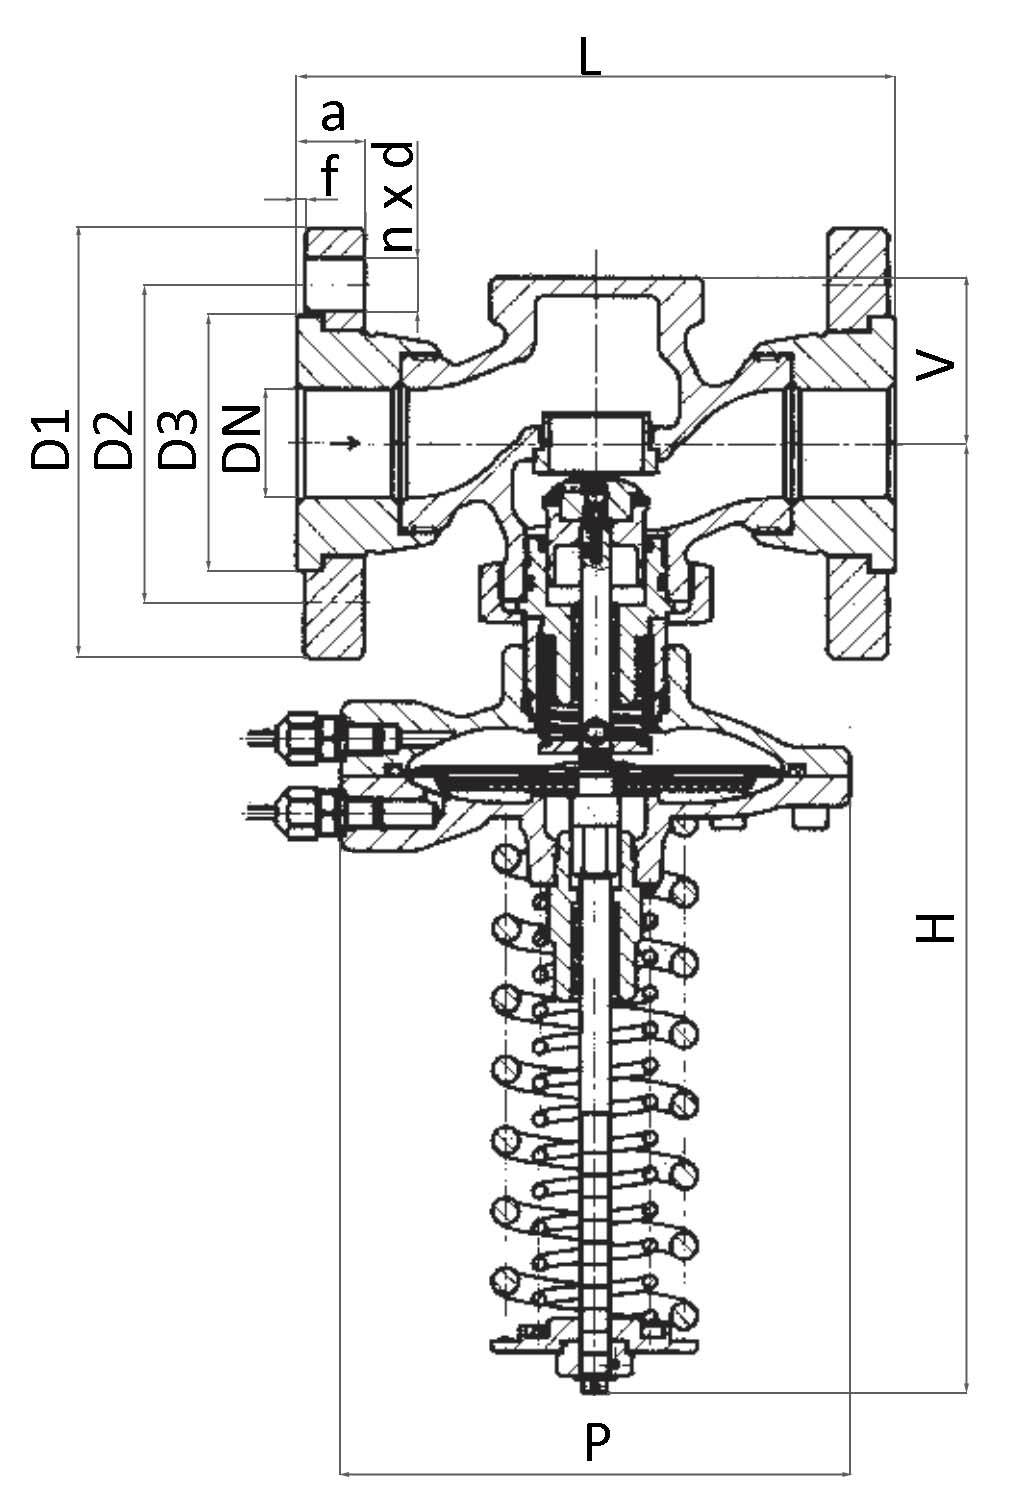 Регулятор перепада давления LDM RD122D Ду15 Ру25 Kvs1 прямого действия, корпус - чугун, фланцевый, Tmax до 150°С, диапазон настройки 23 (30-210 кПа)